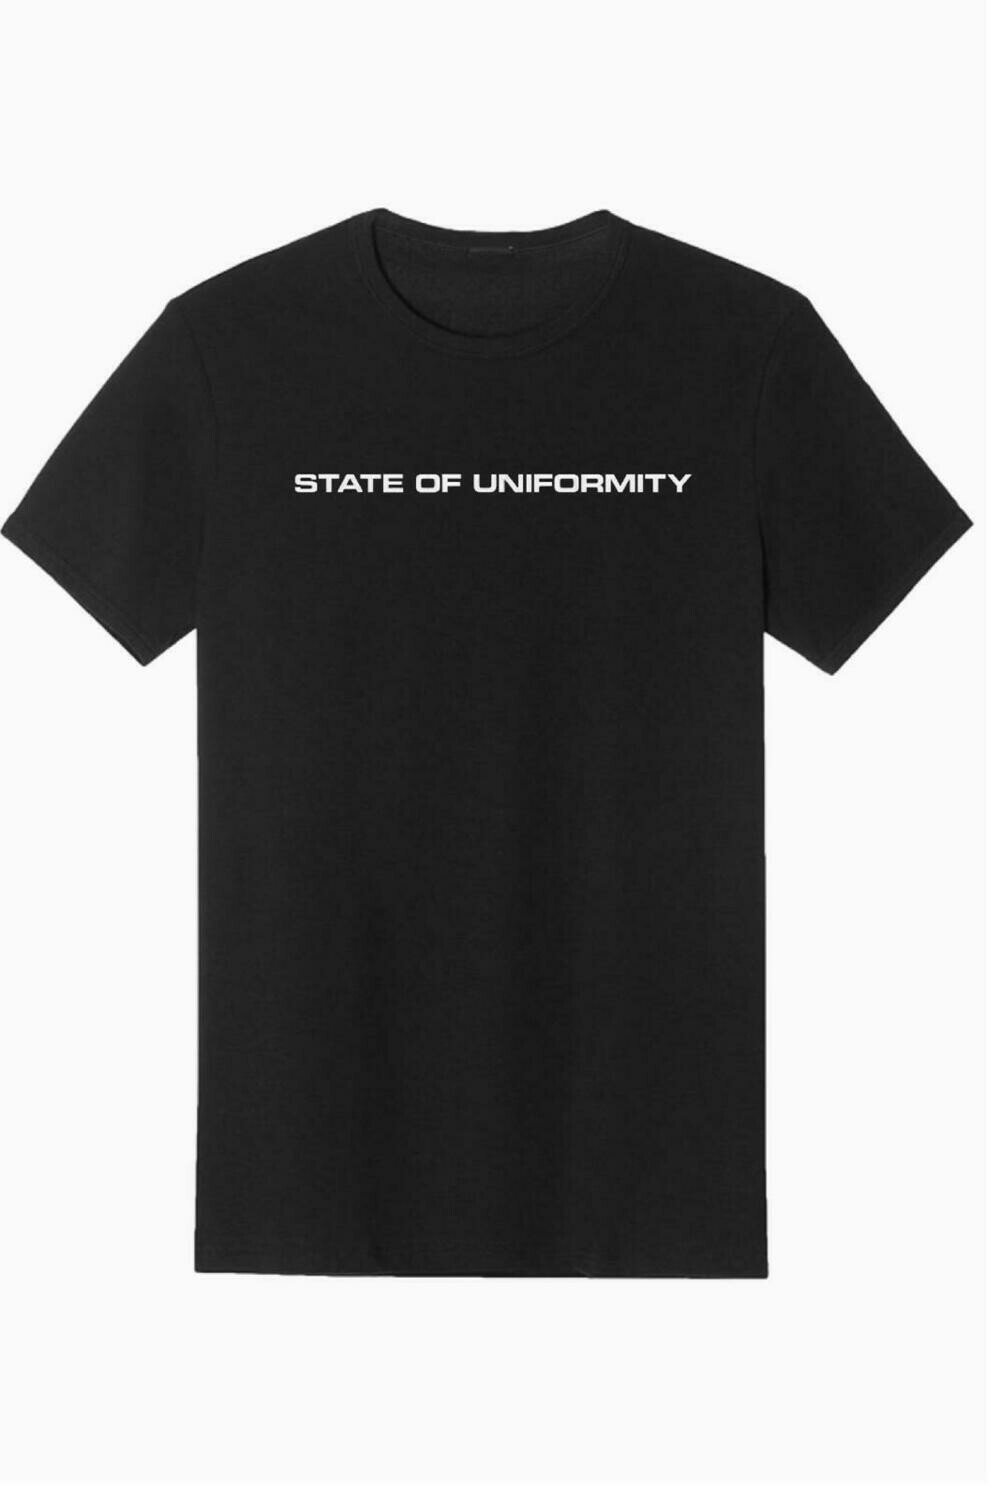 T-SHIRT NERA STATE OF UNIFORMITY